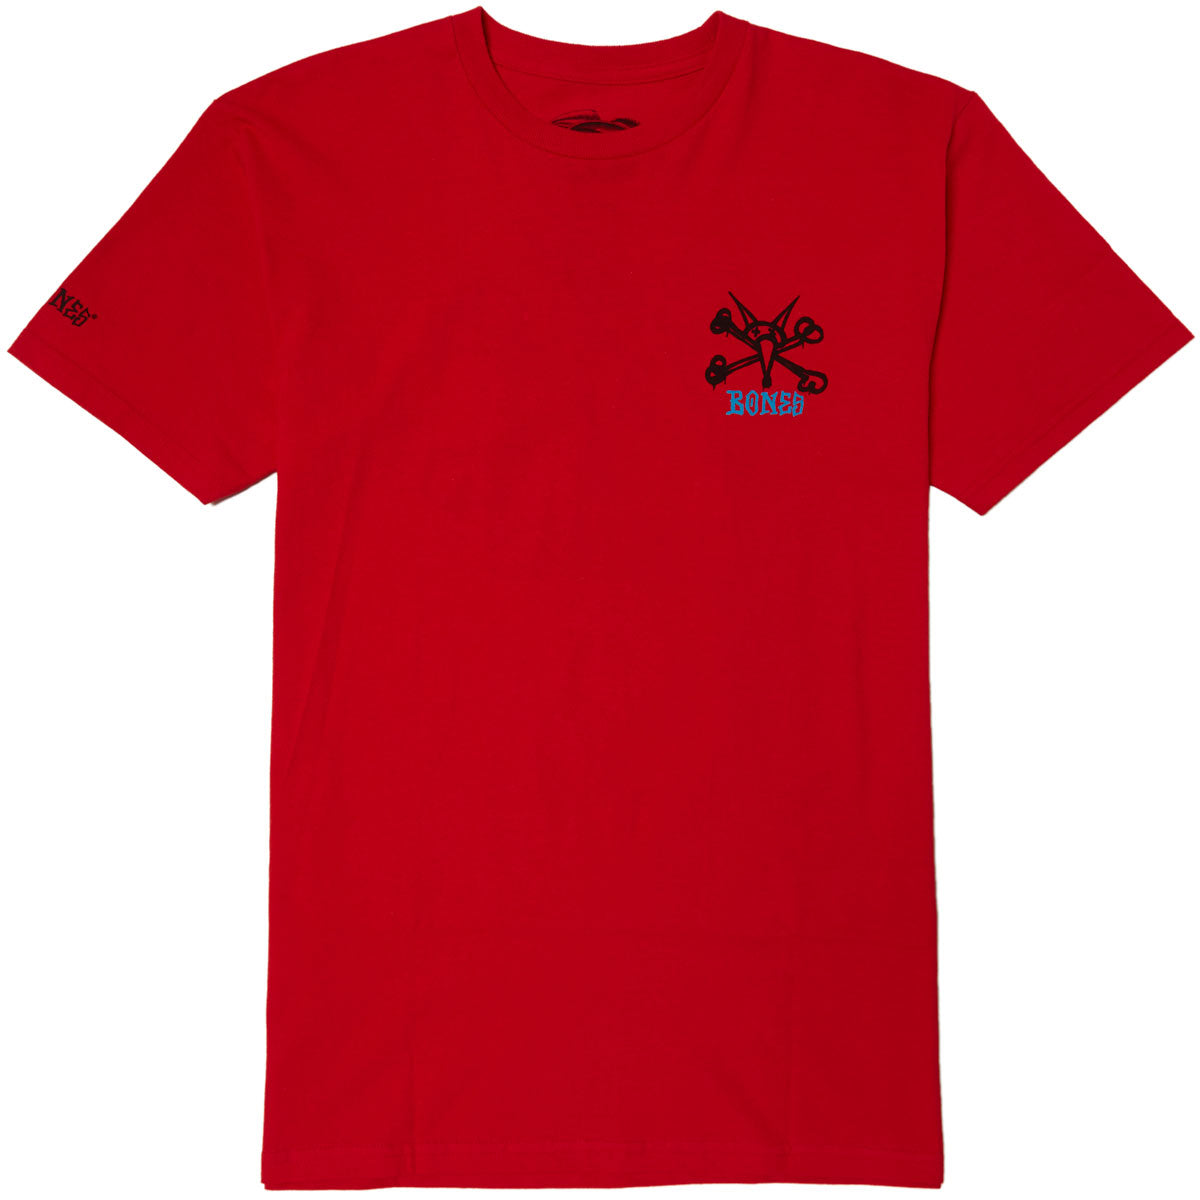 Powell-Peralta Rat Bones T-Shirt - Red image 4